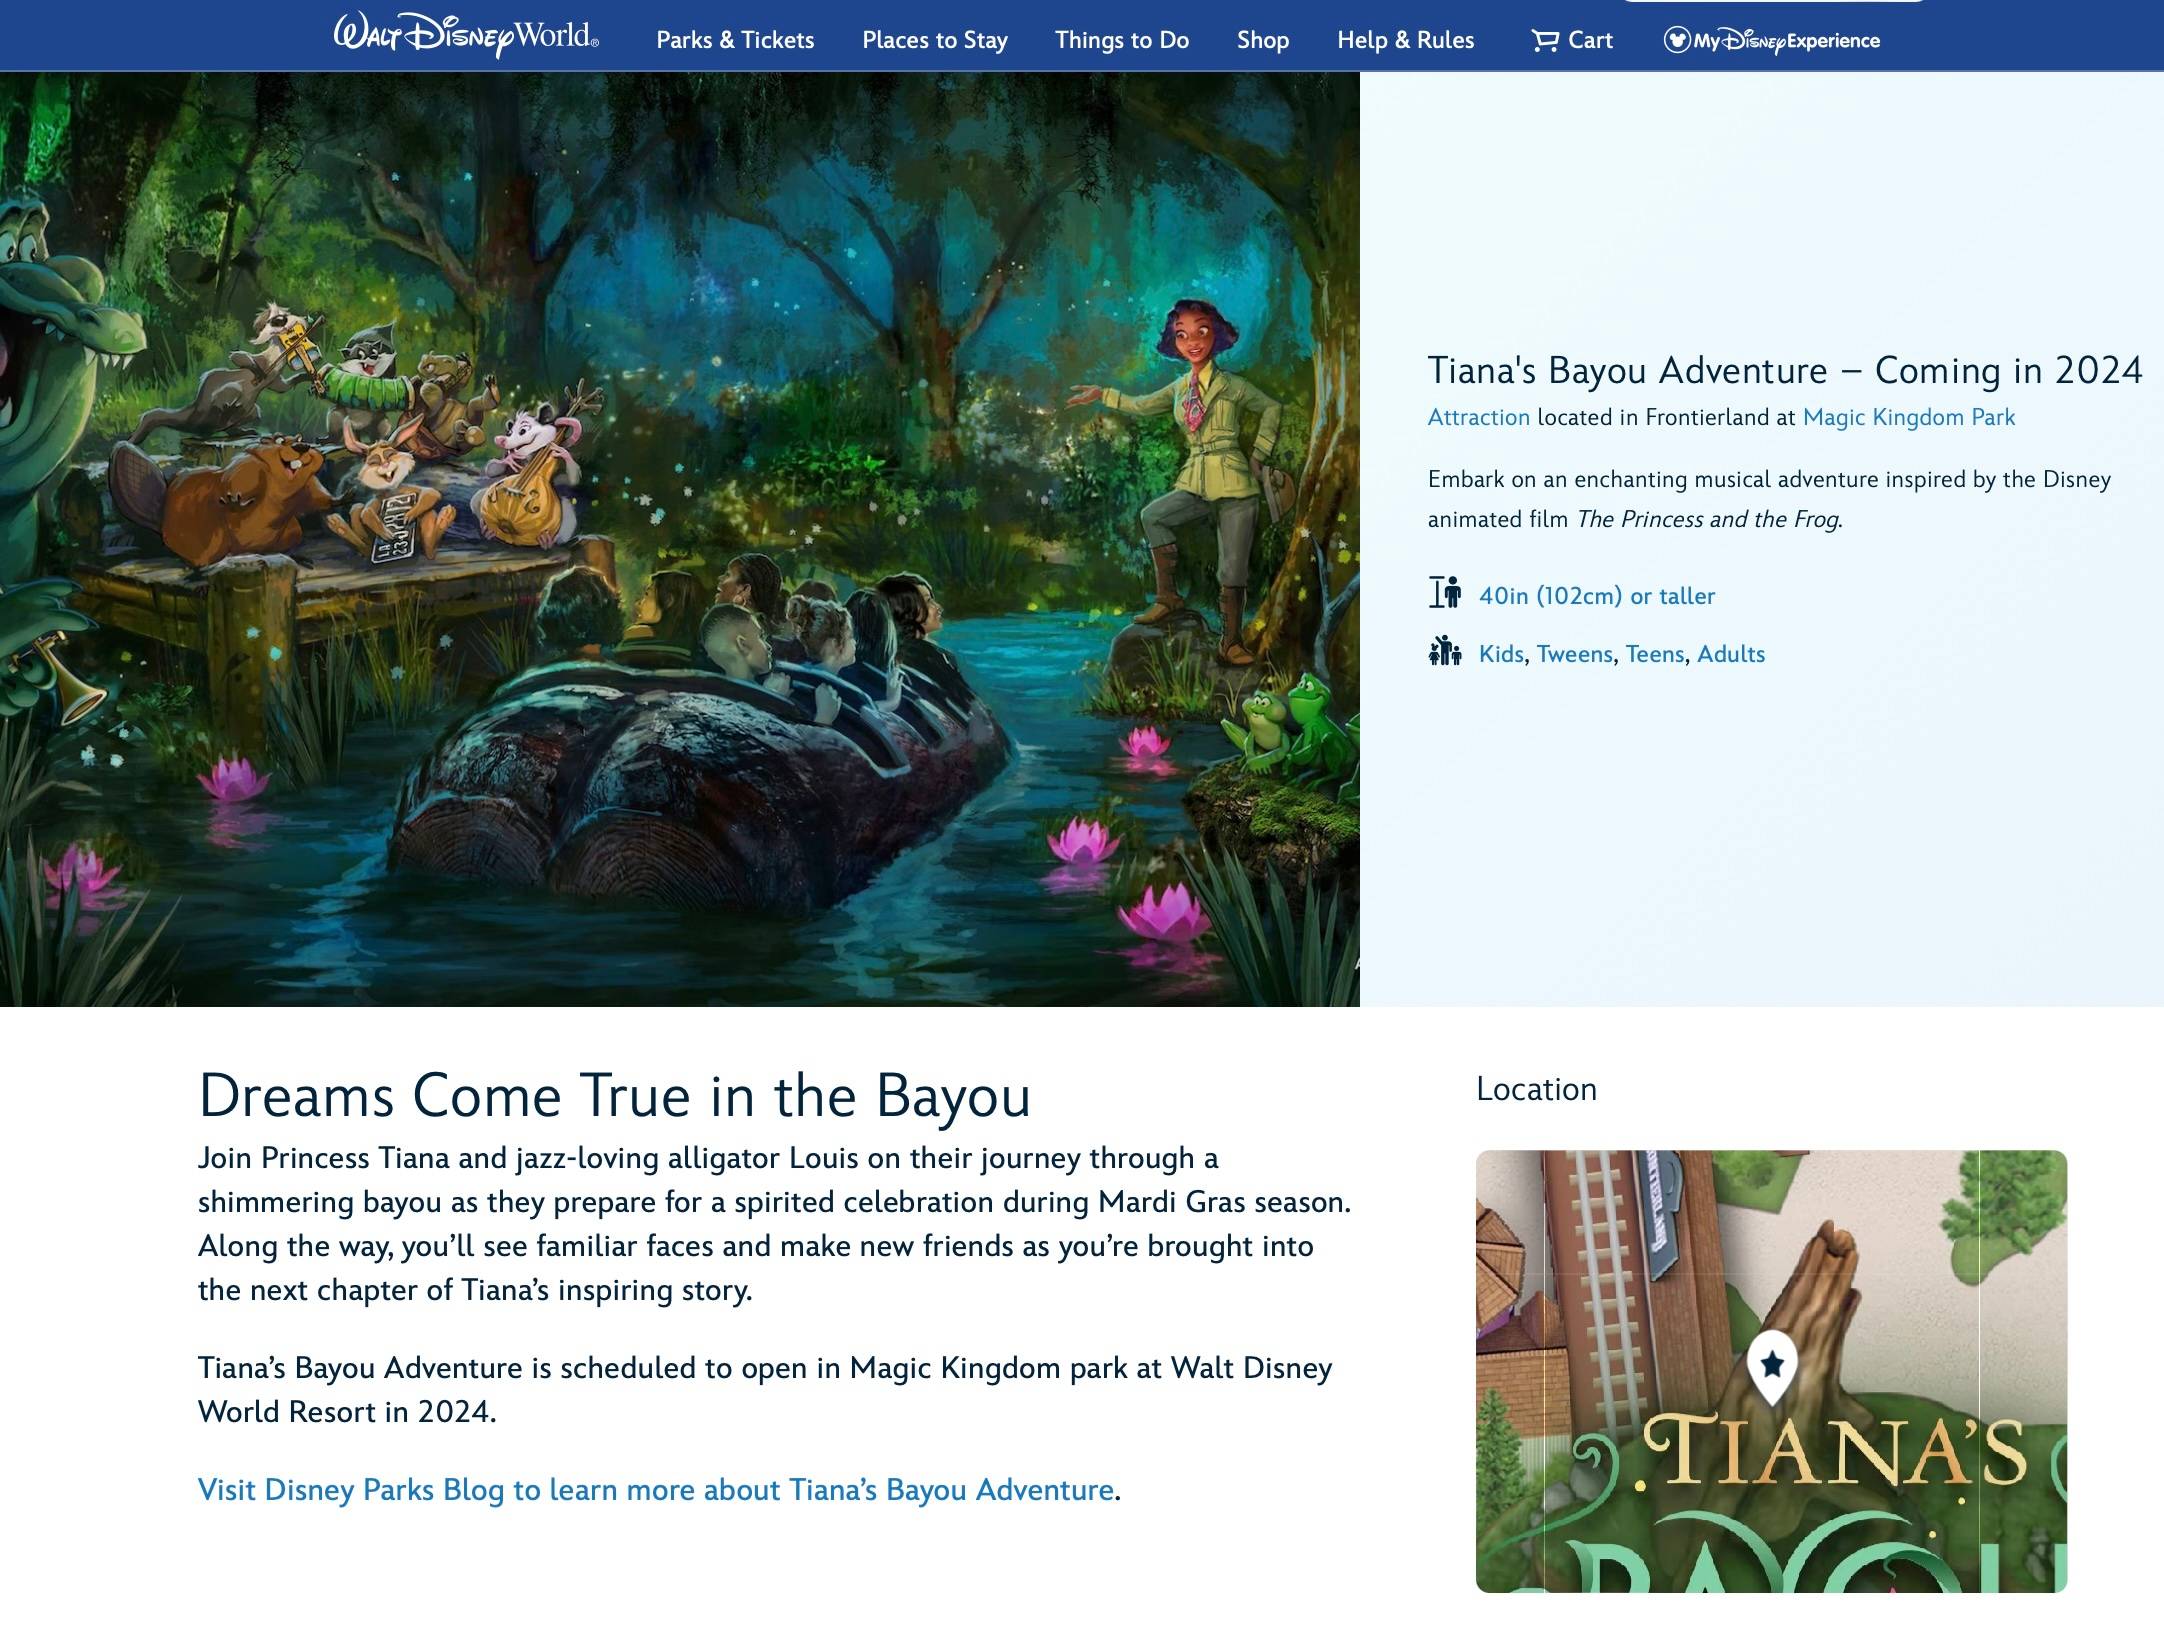 Disney adds Tiana's Bayou Adventure pages to its Walt Disney World and Disneyland websites